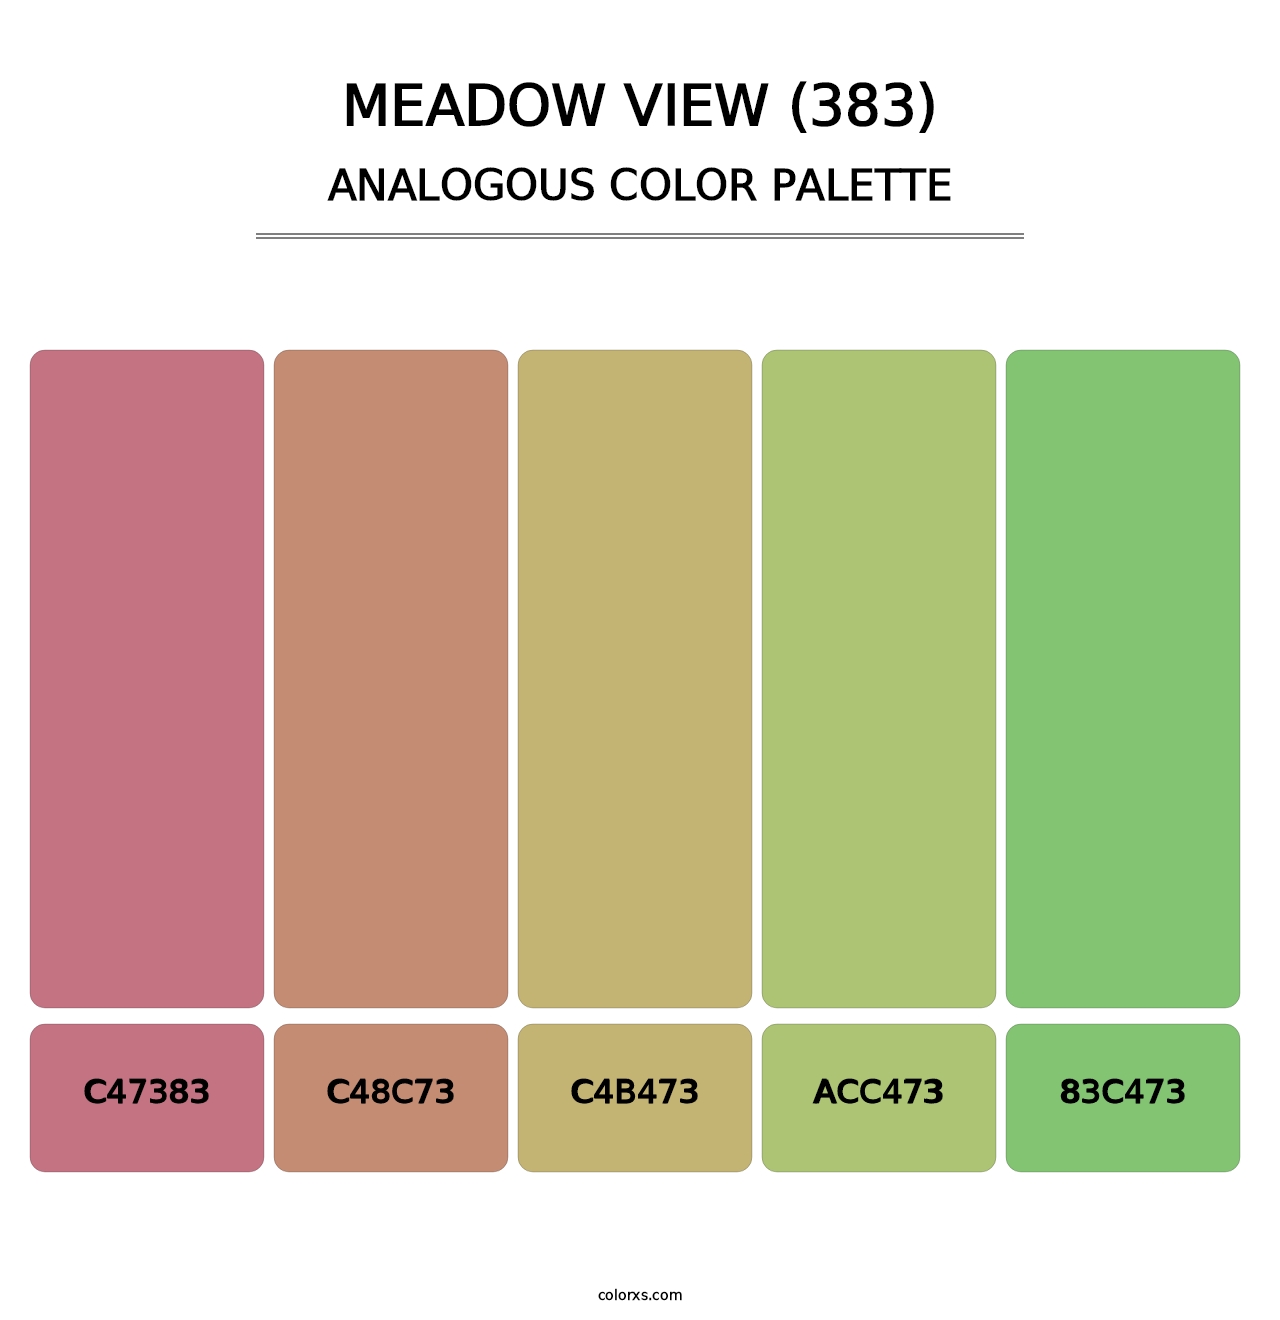 Meadow View (383) - Analogous Color Palette